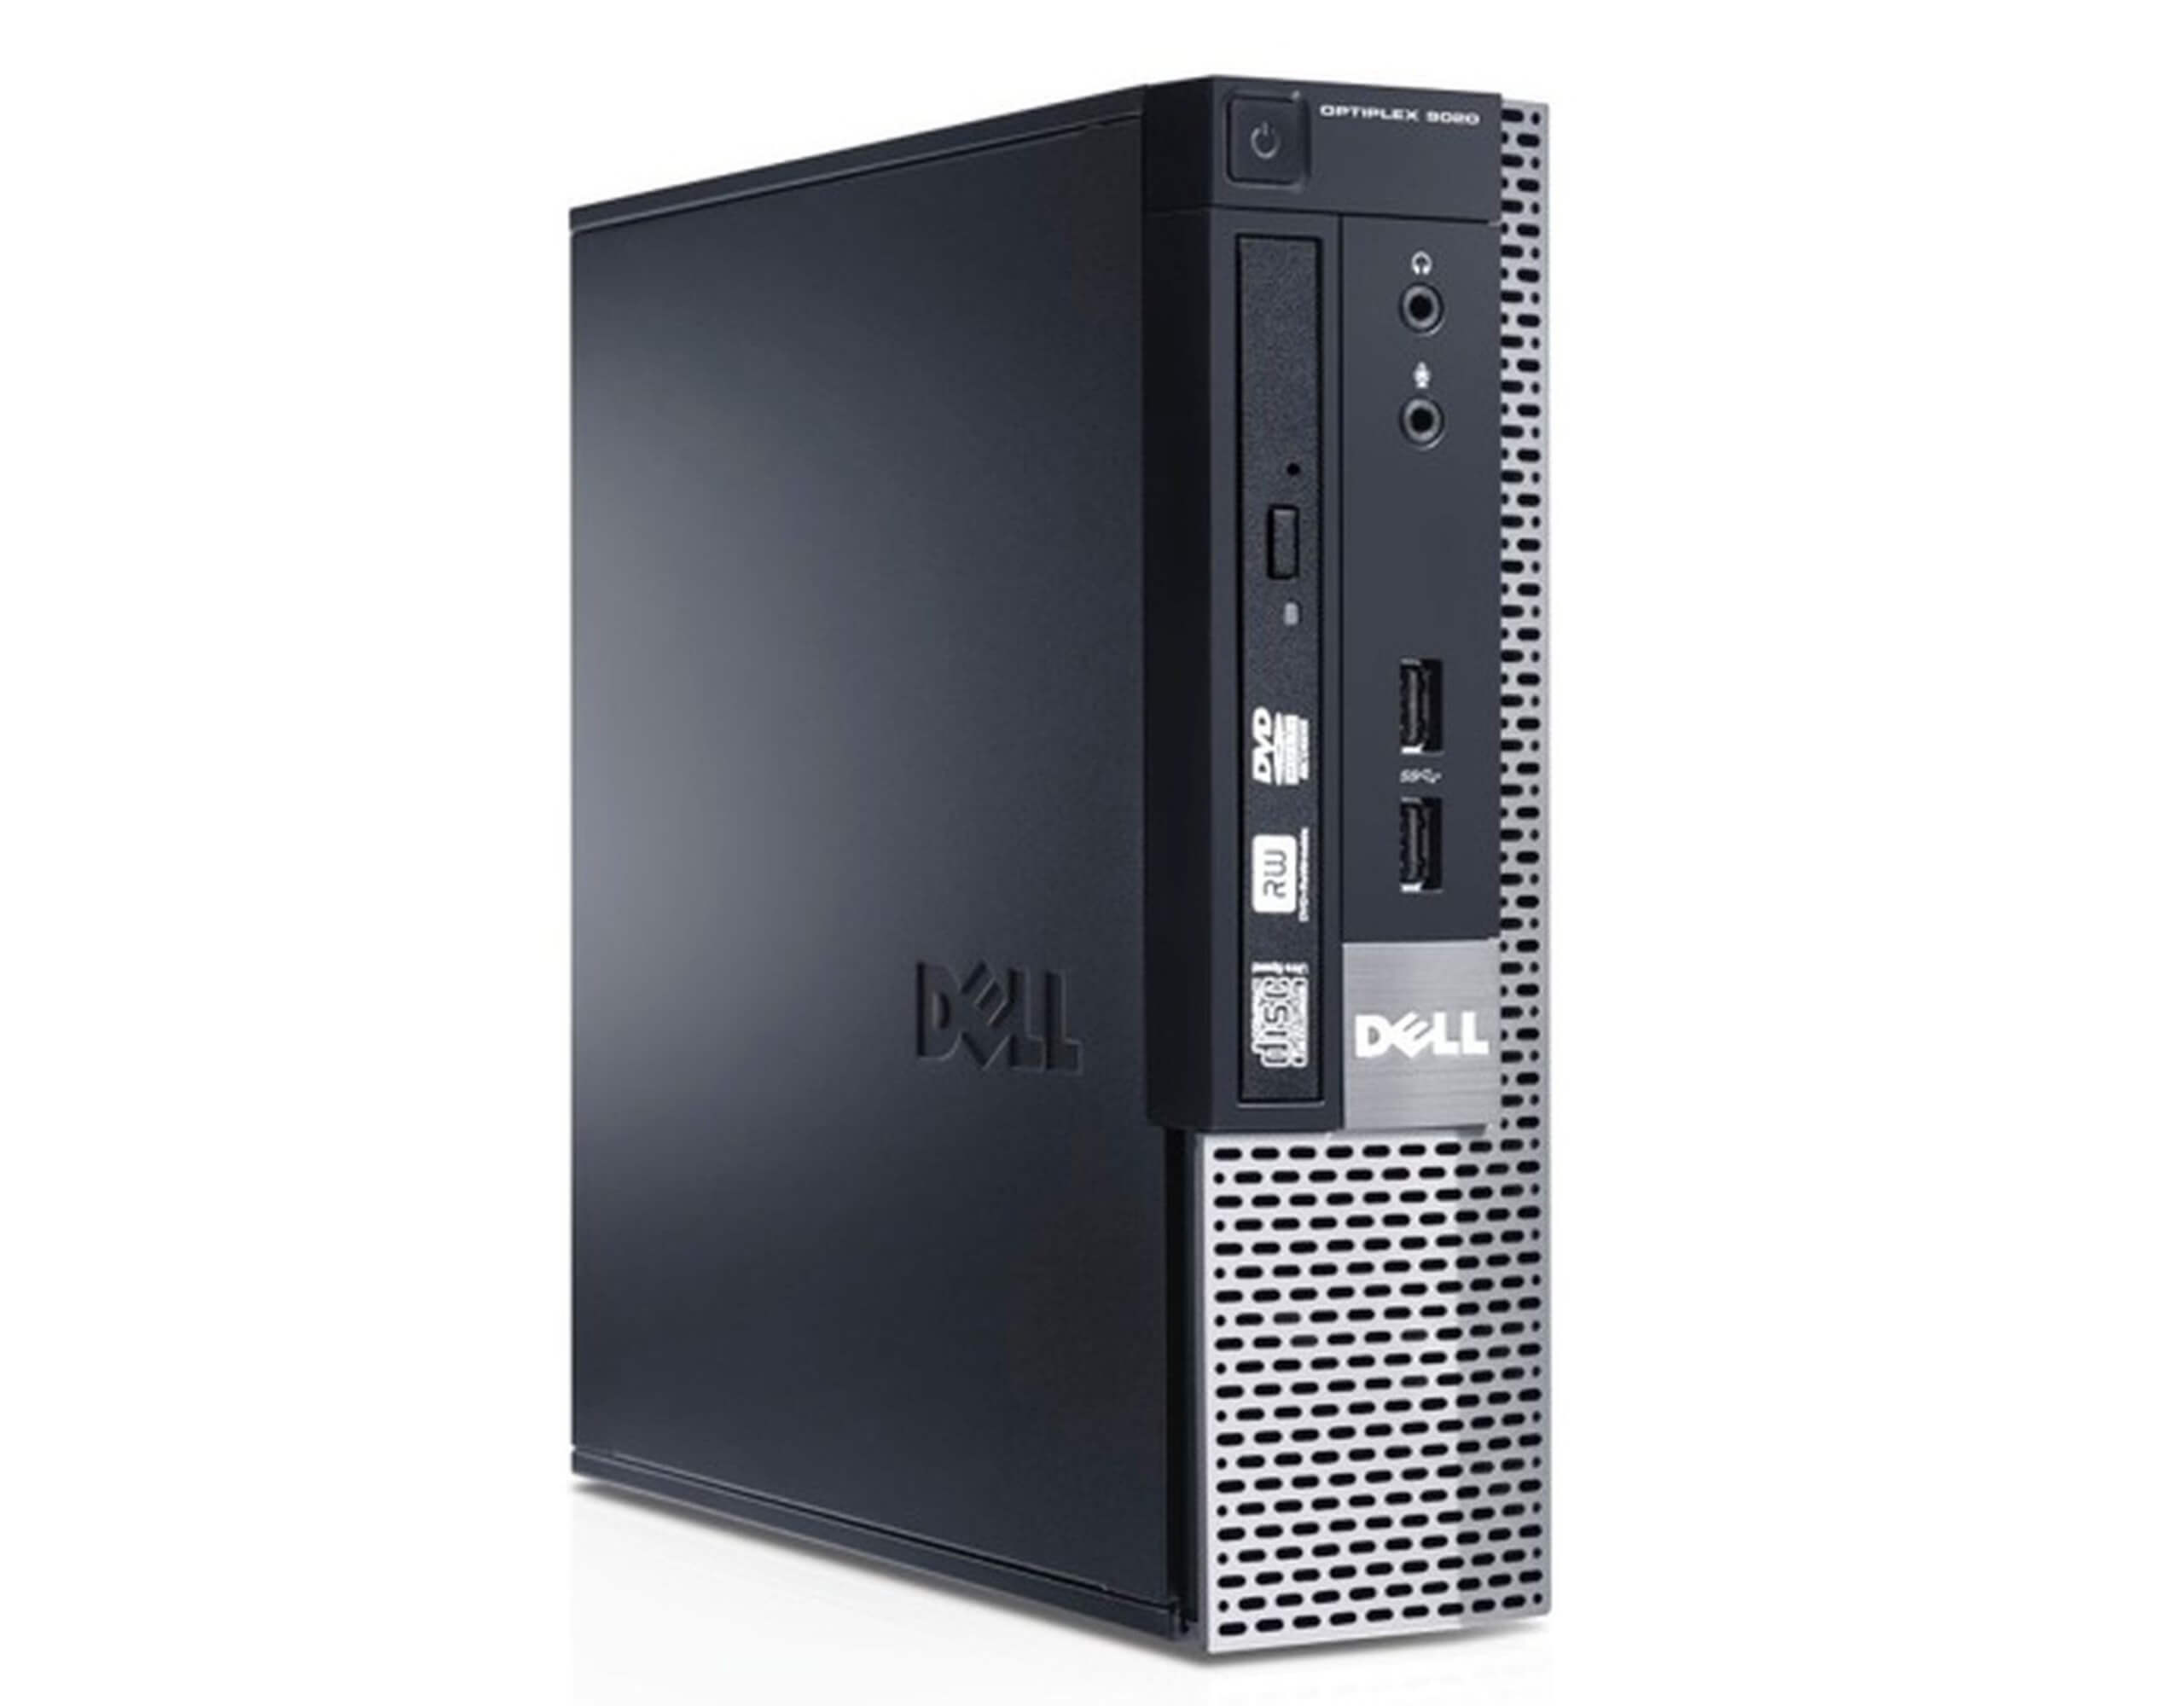 DELL 9020 USFF I5-4590S 3.0 / 8192 MB DDR3 / 128 GB SSD NOWY / DVD / WINDOWS 10 PRO